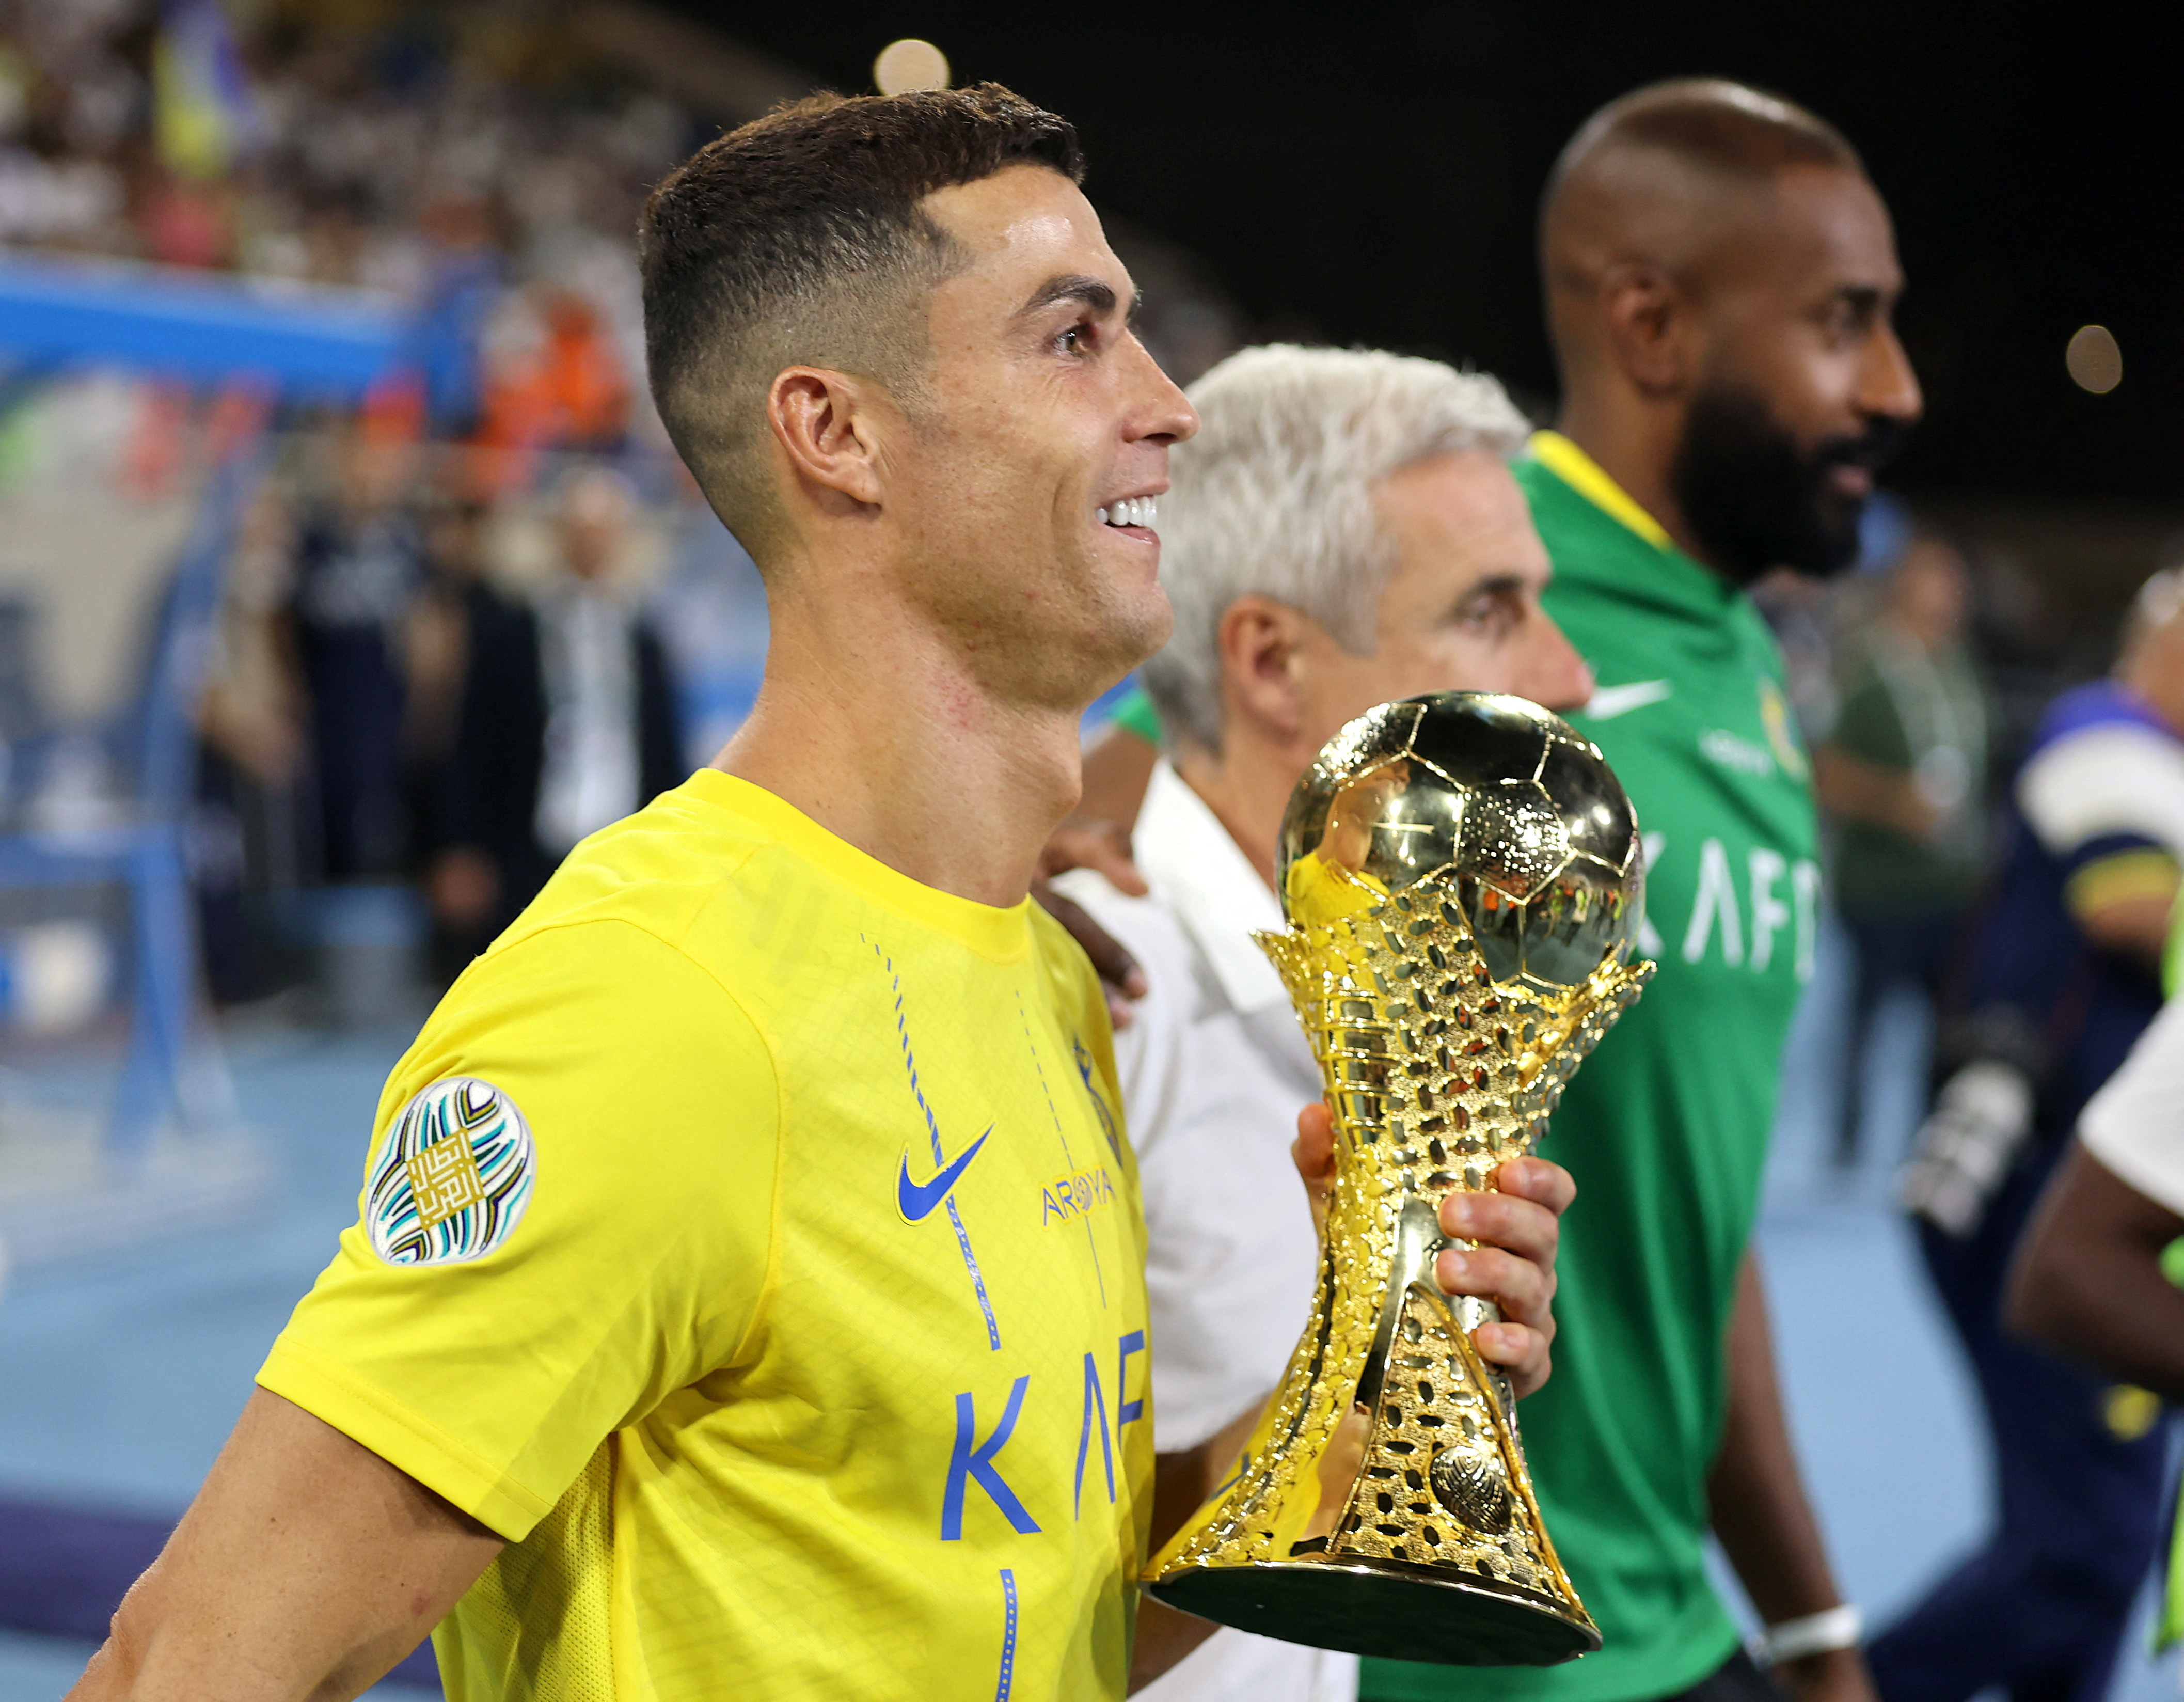 Ronaldo wins first title at Al-Nassr with brace in Arab Club